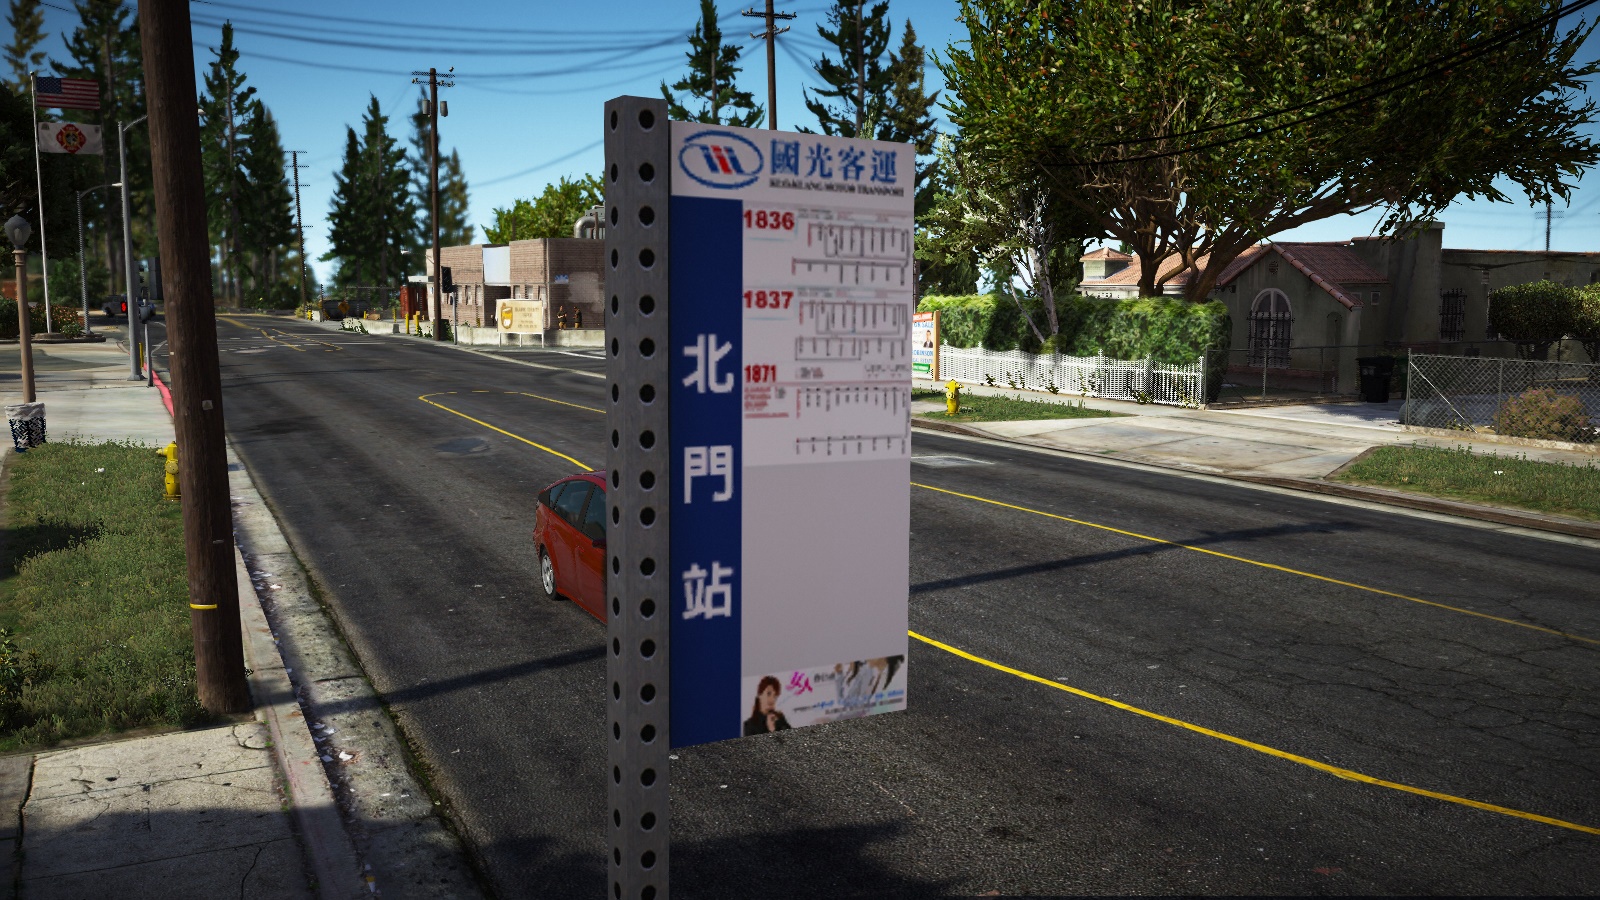 R.O.C (Taiwan) 國光客運 候車站牌 Bus Stop Sign.jpg